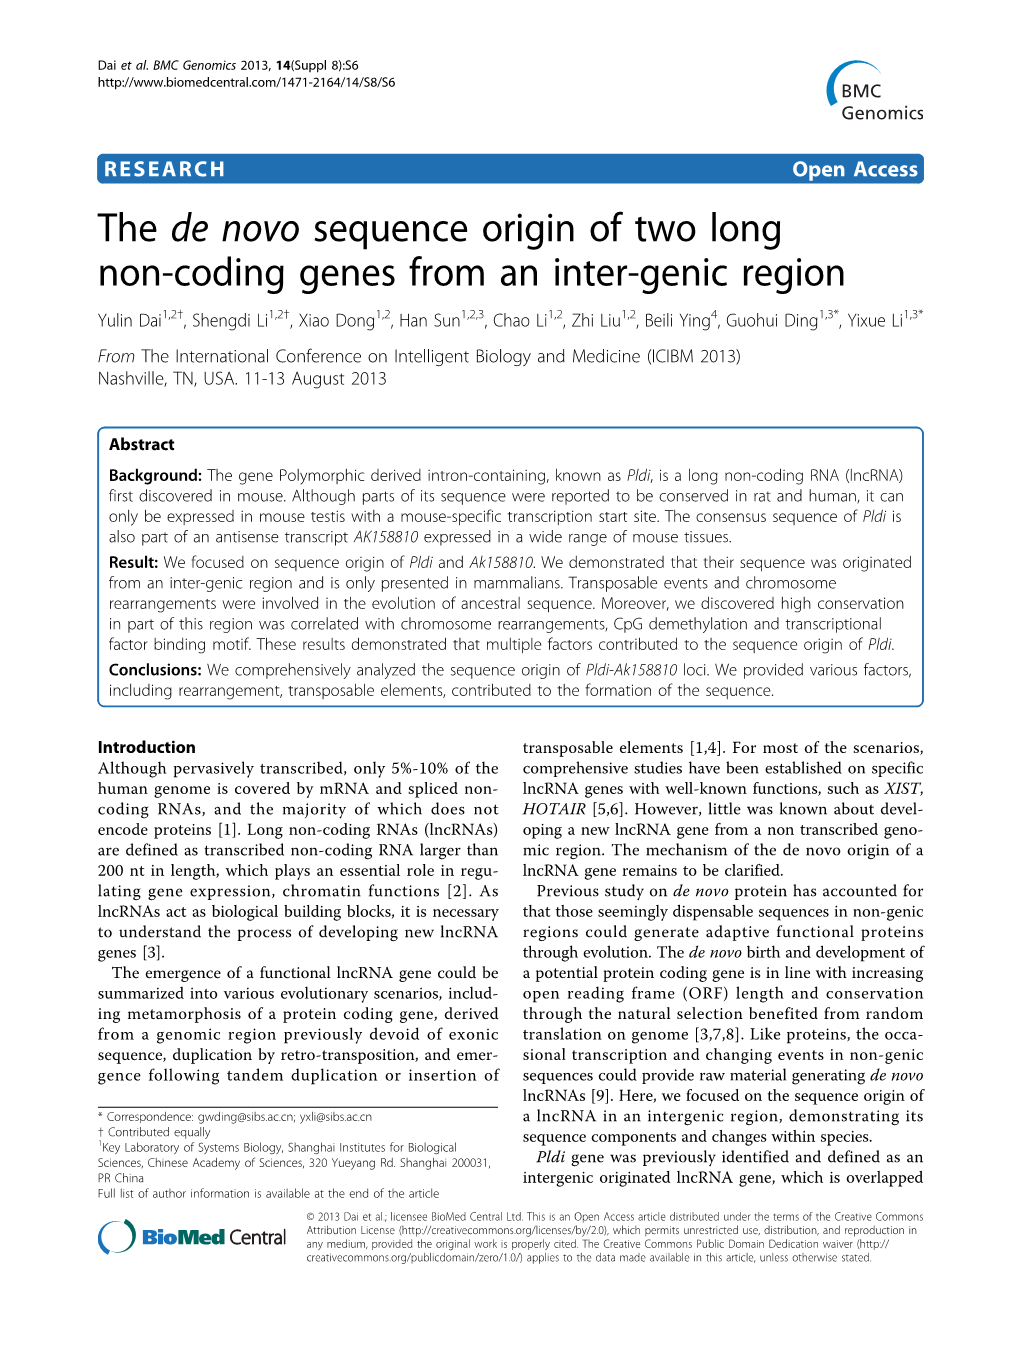 The De Novo Sequence Origin of Two Long Non-Coding Genes from an Inter-Genic Region